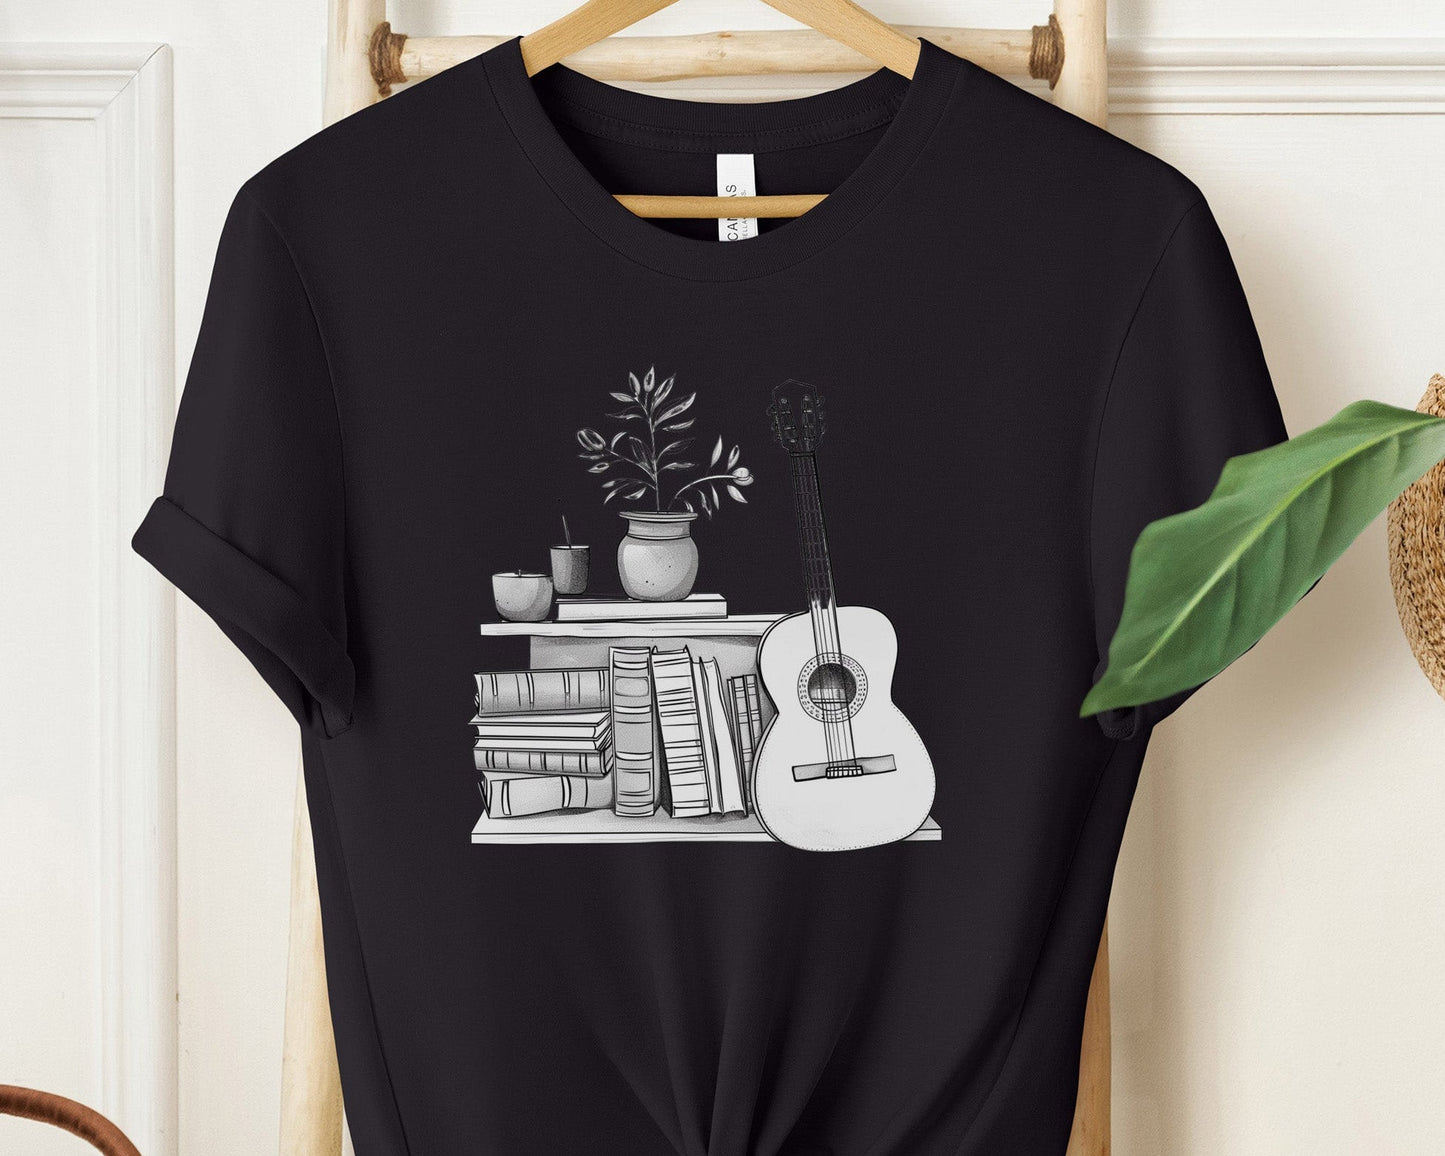 "Minimalist Books Guitar Apple Teacher T-Shirt for Women - Soft Cotton Crewneck Tee"